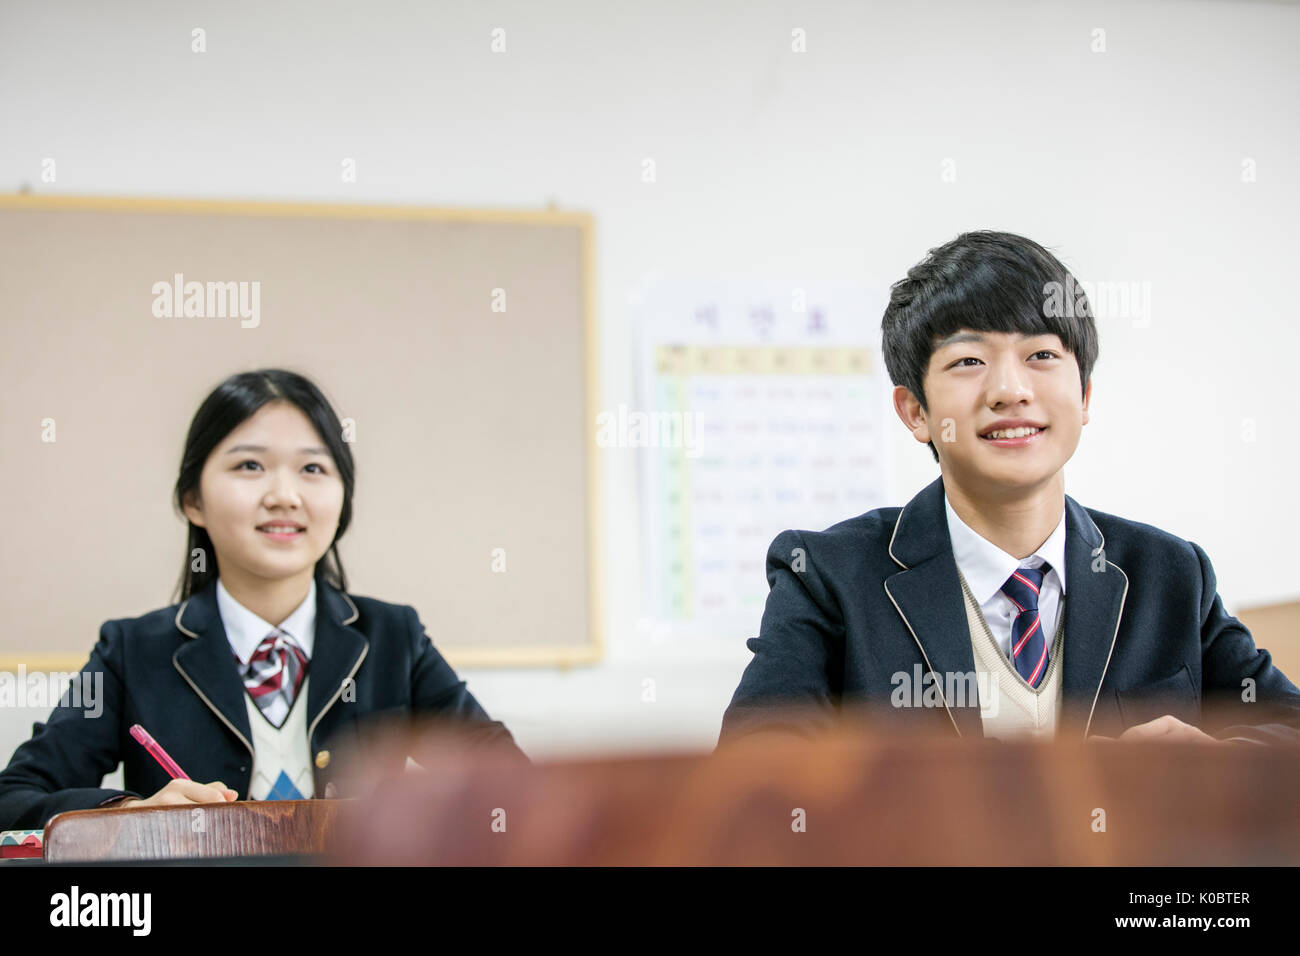 Pf Portrait smiling school boy et school girl in classroom Banque D'Images